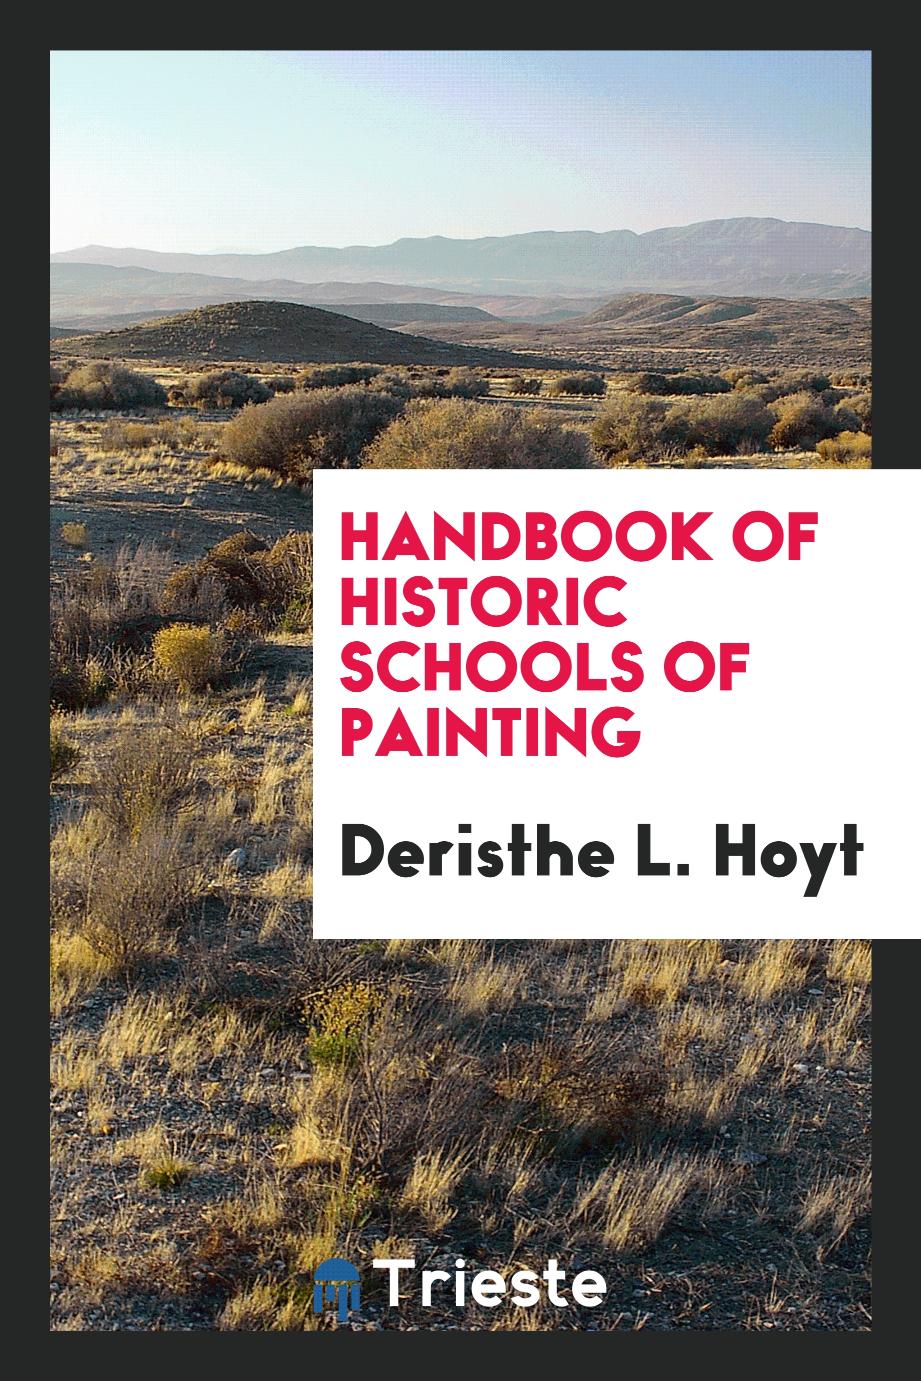 Handbook of historic schools of painting